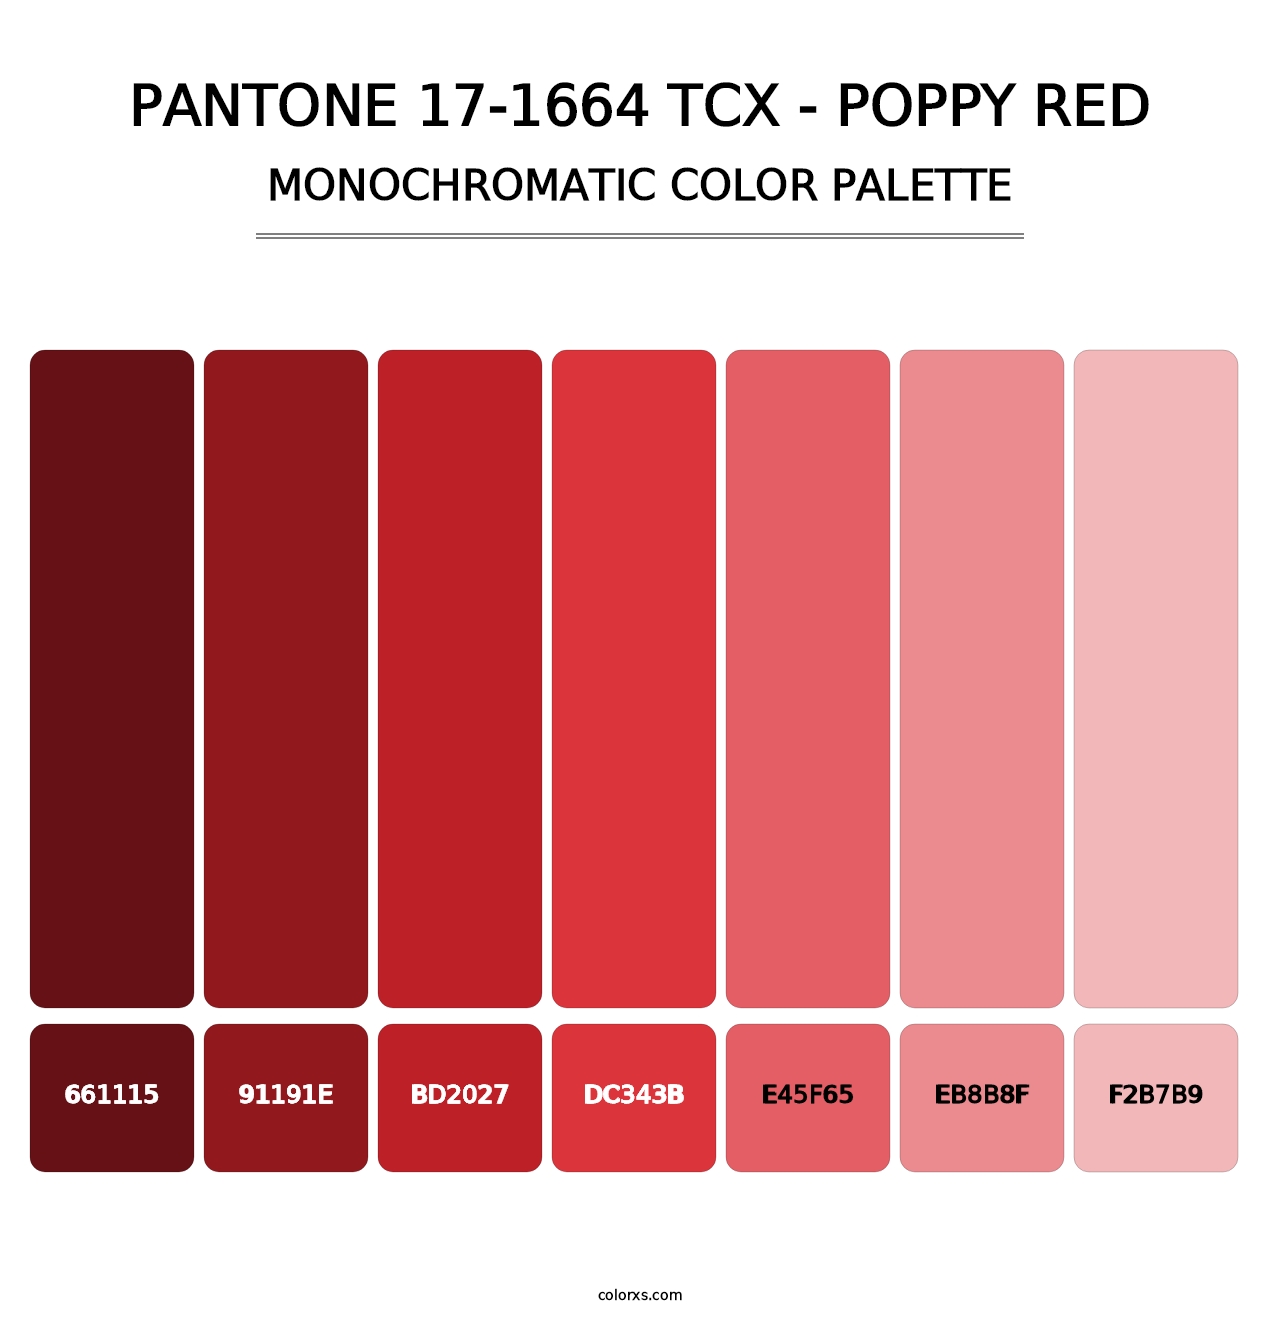 PANTONE 17-1664 TCX - Poppy Red - Monochromatic Color Palette